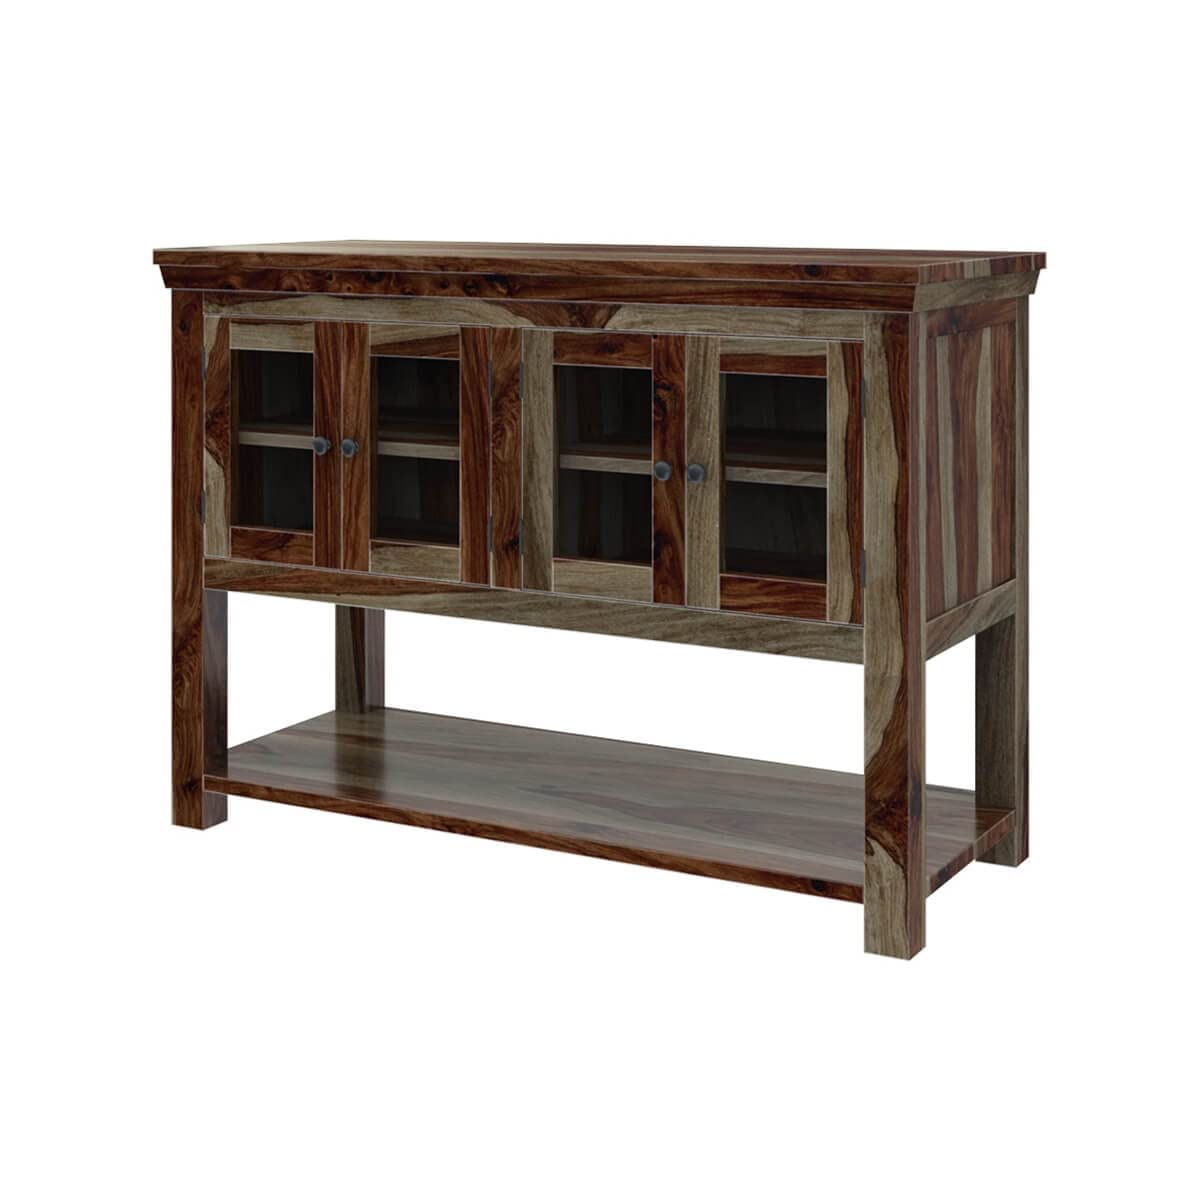 Woodmarwar Solid Sheesham Wood Sideboard With Storage for Living Room Furniture